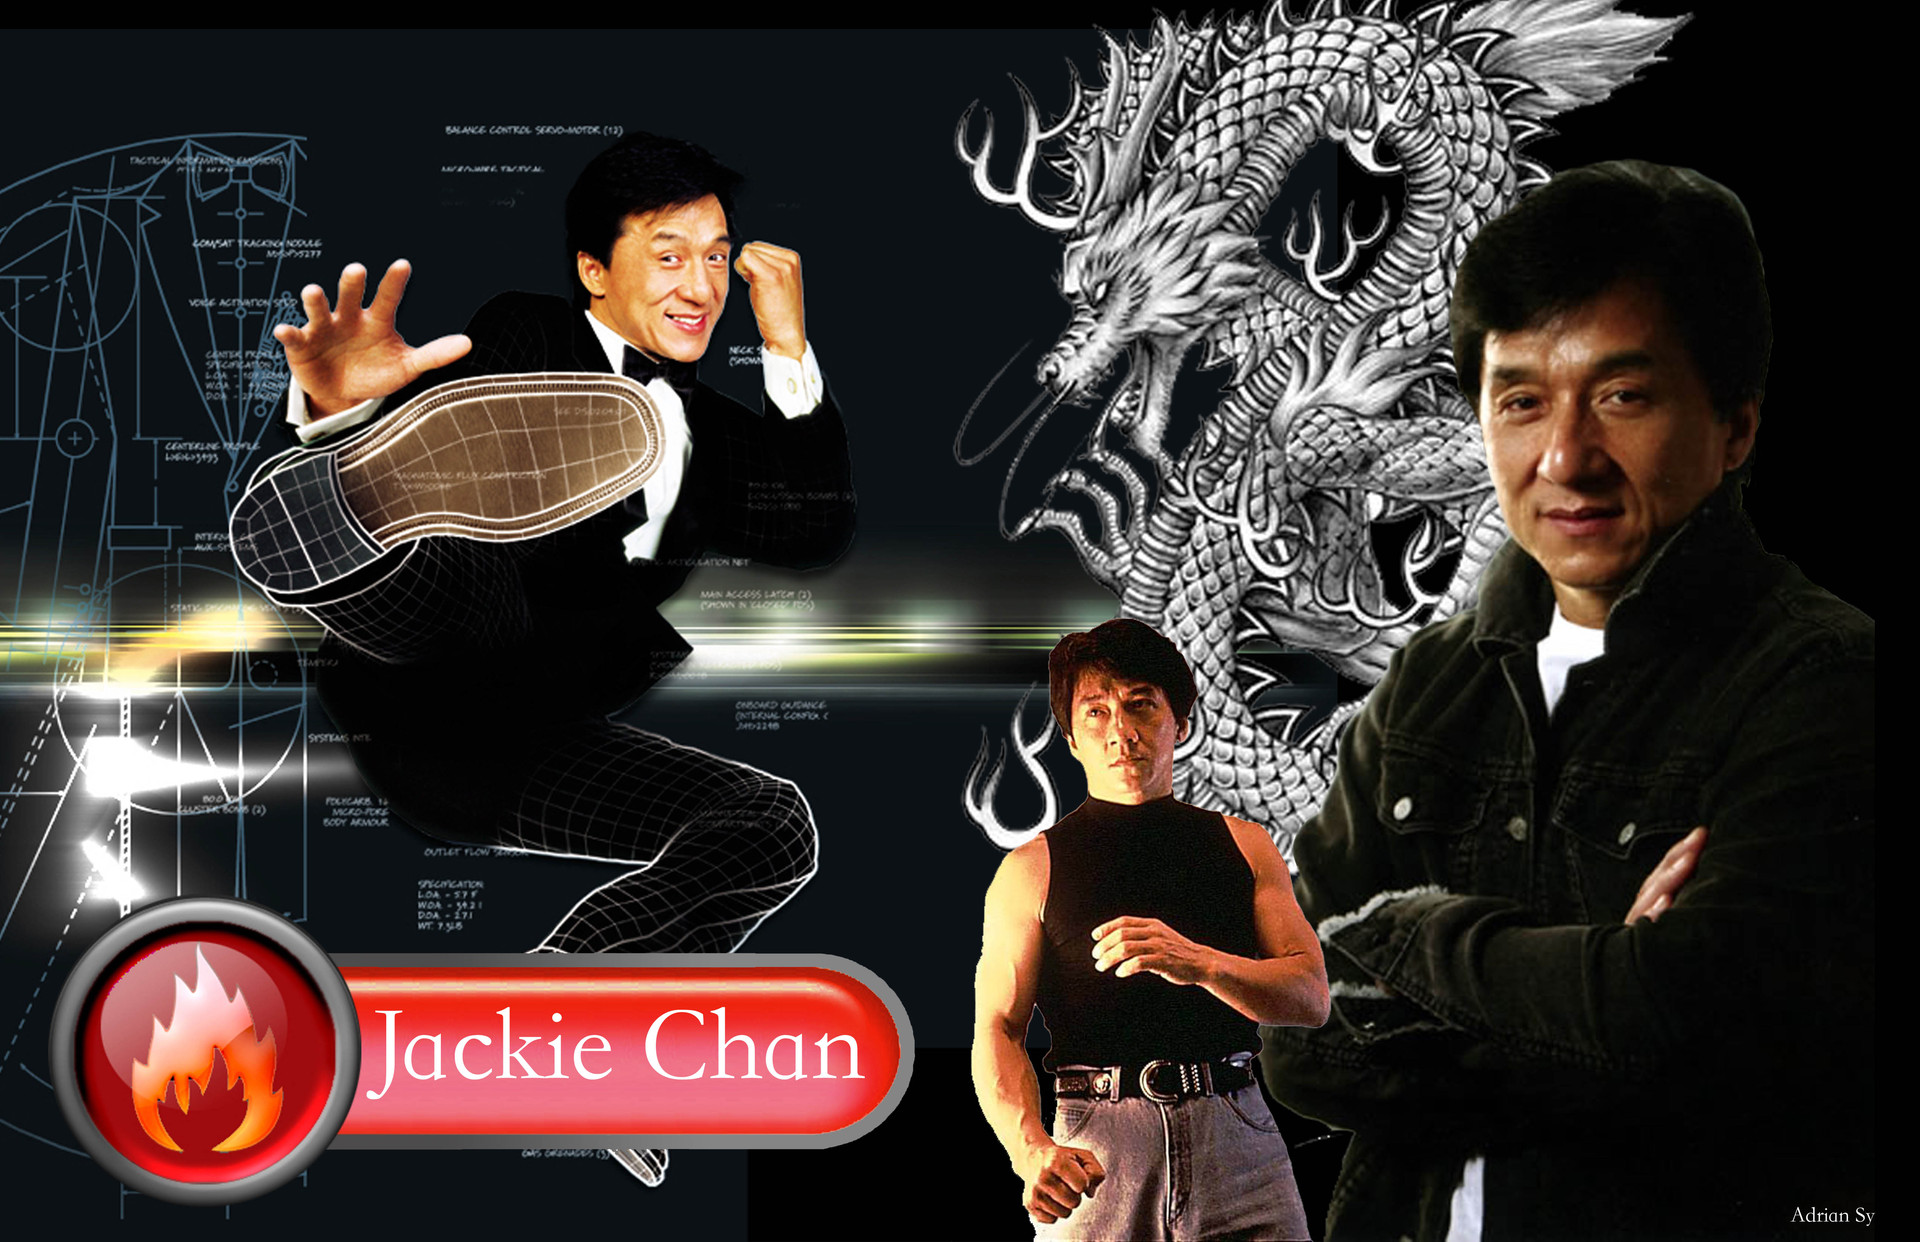 http://images.fanpop.com/images/image_uploads/Jackie-chan-wallpaper-jackie-chan-367346_1920_1242.jpg